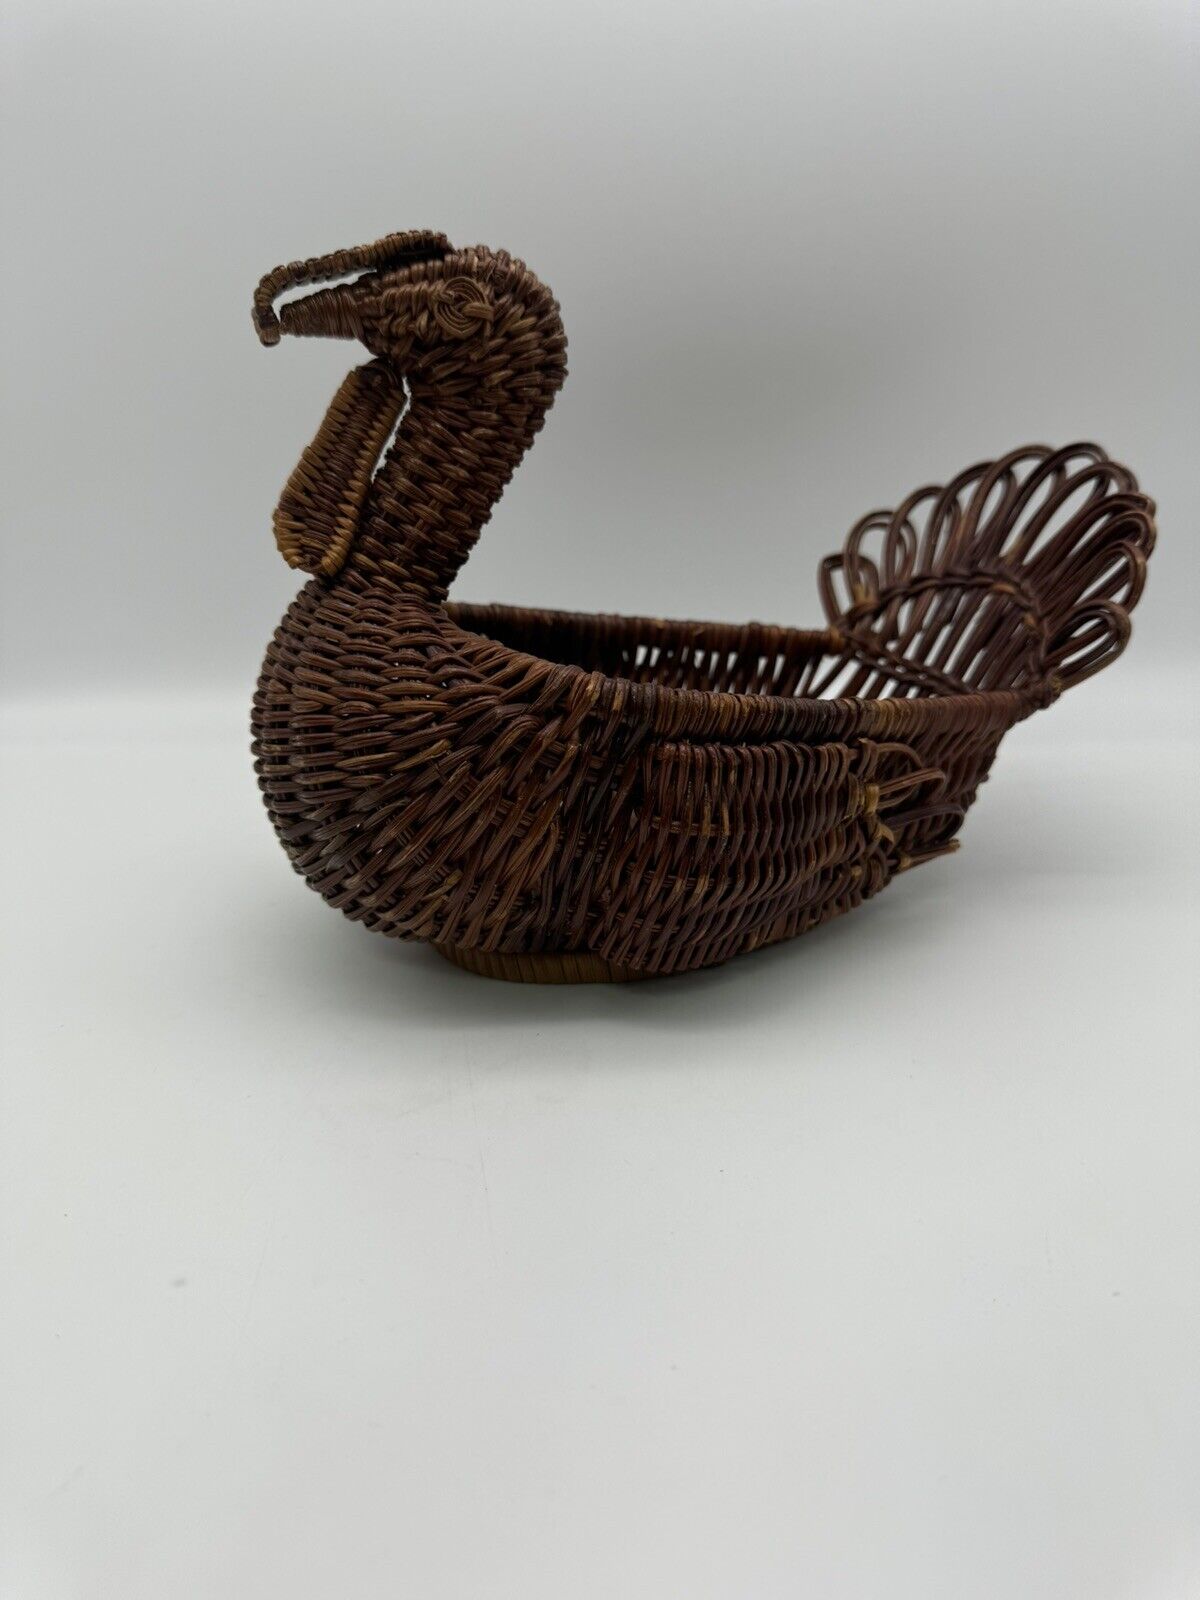 Rattan Wicker Decorative Turkey Basket